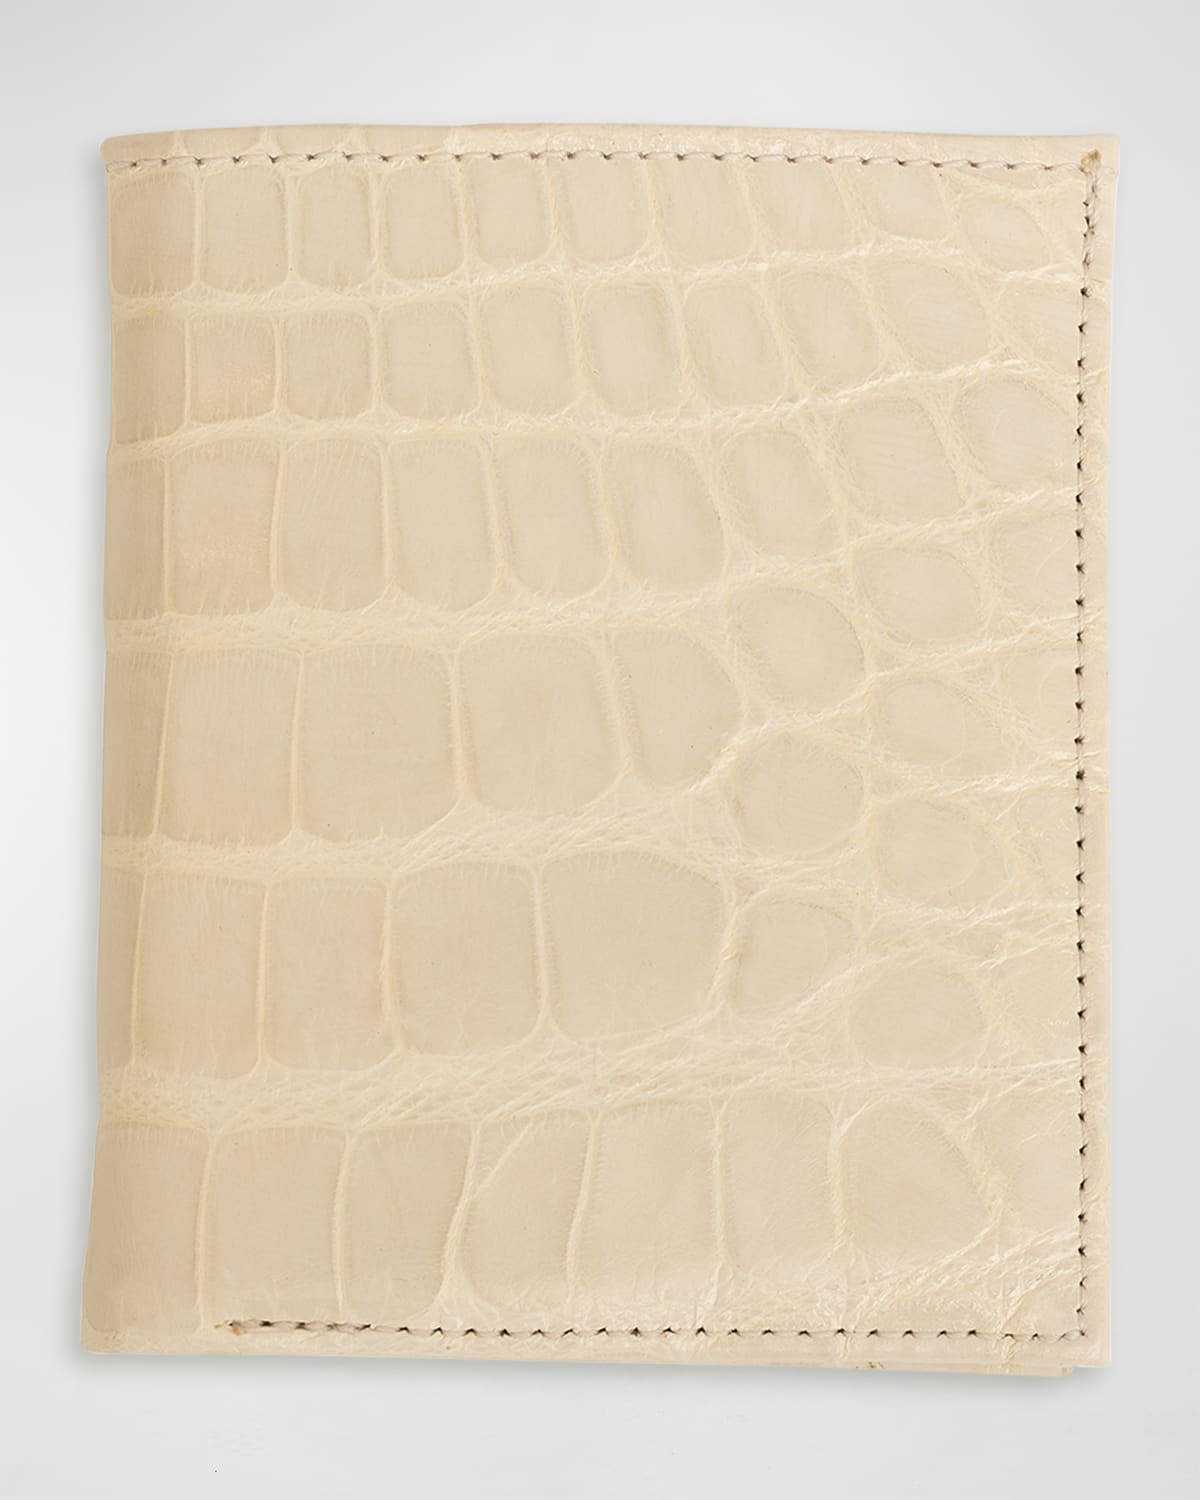 Men's Glazed Alligator Leather Bifold Wallet